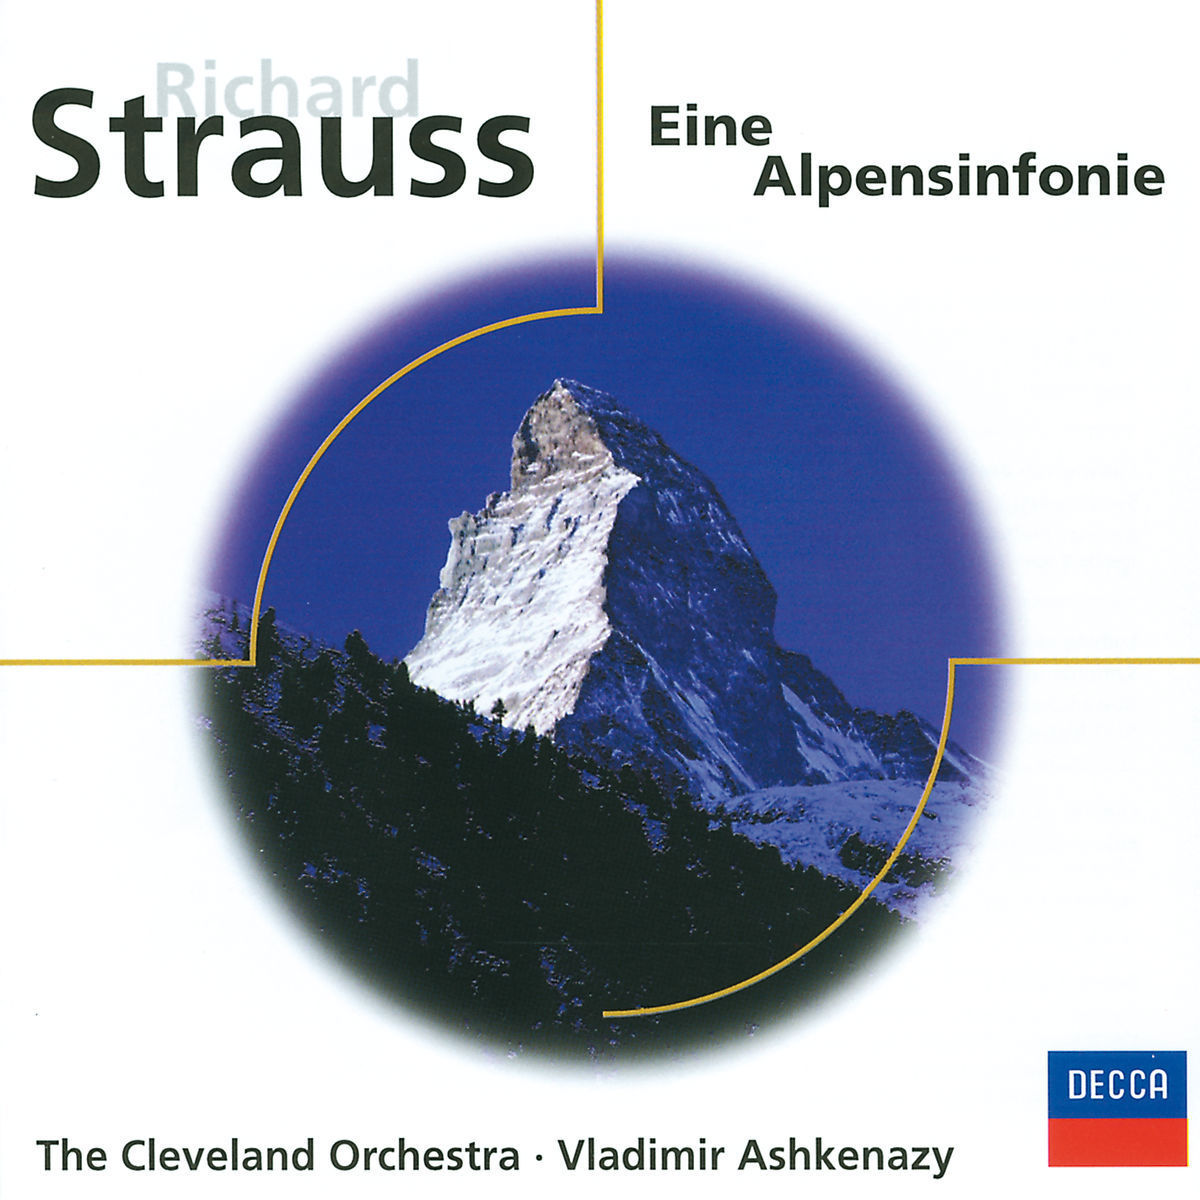 CD Richard Strauss - Eine Alpensinfonie - Vladimir Ashkenazy